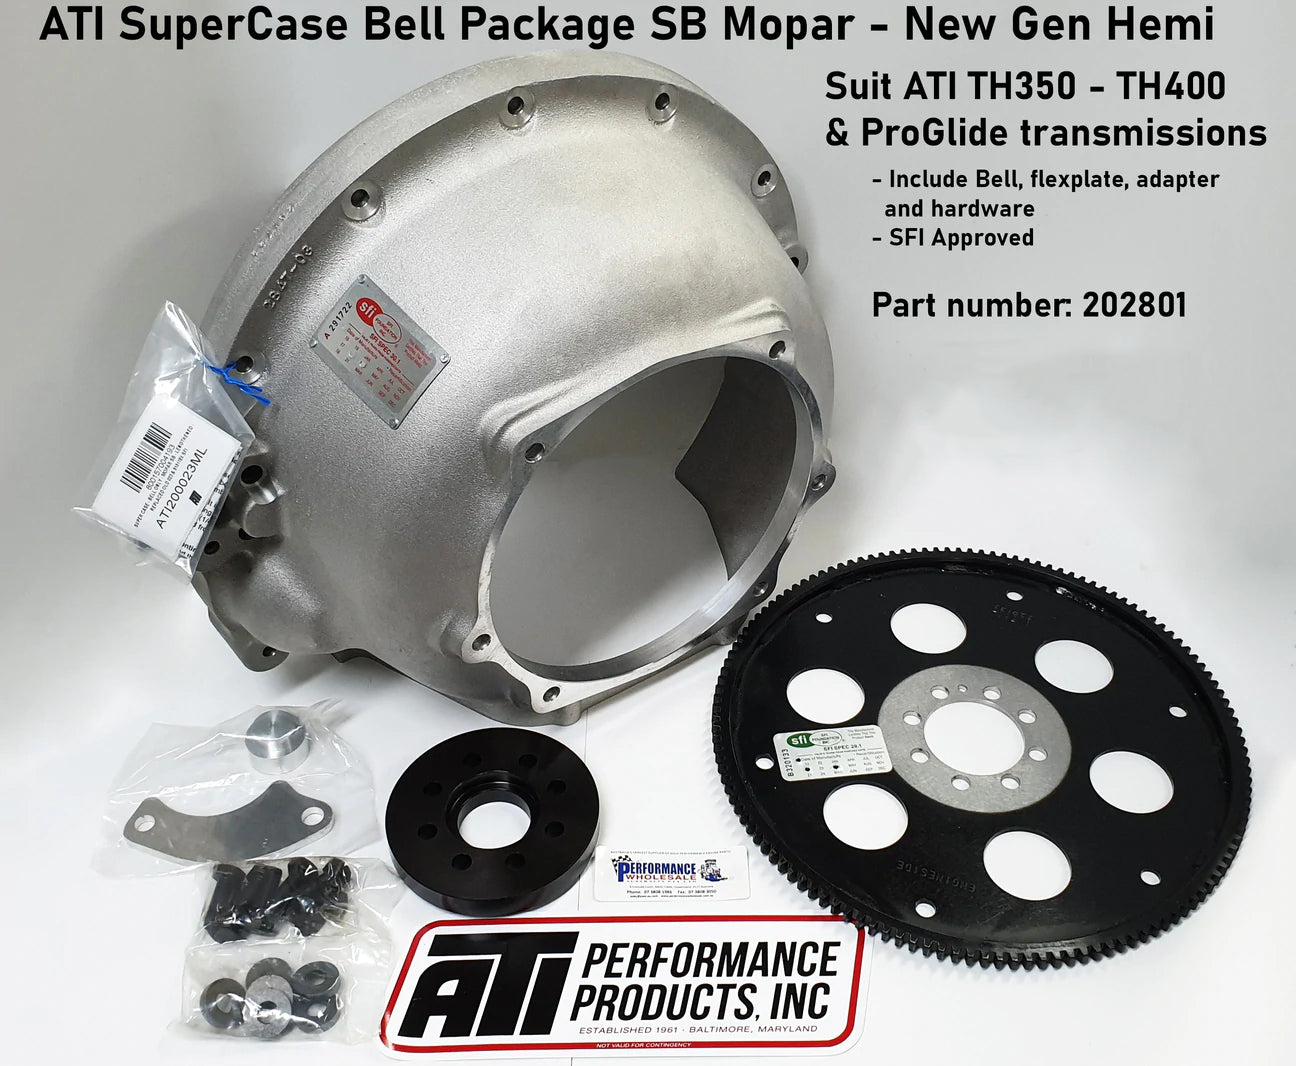 ATI Supercase Bell Package SB Mopar - New Gen Hemi - ATI TH350 - TH400 & Proglide